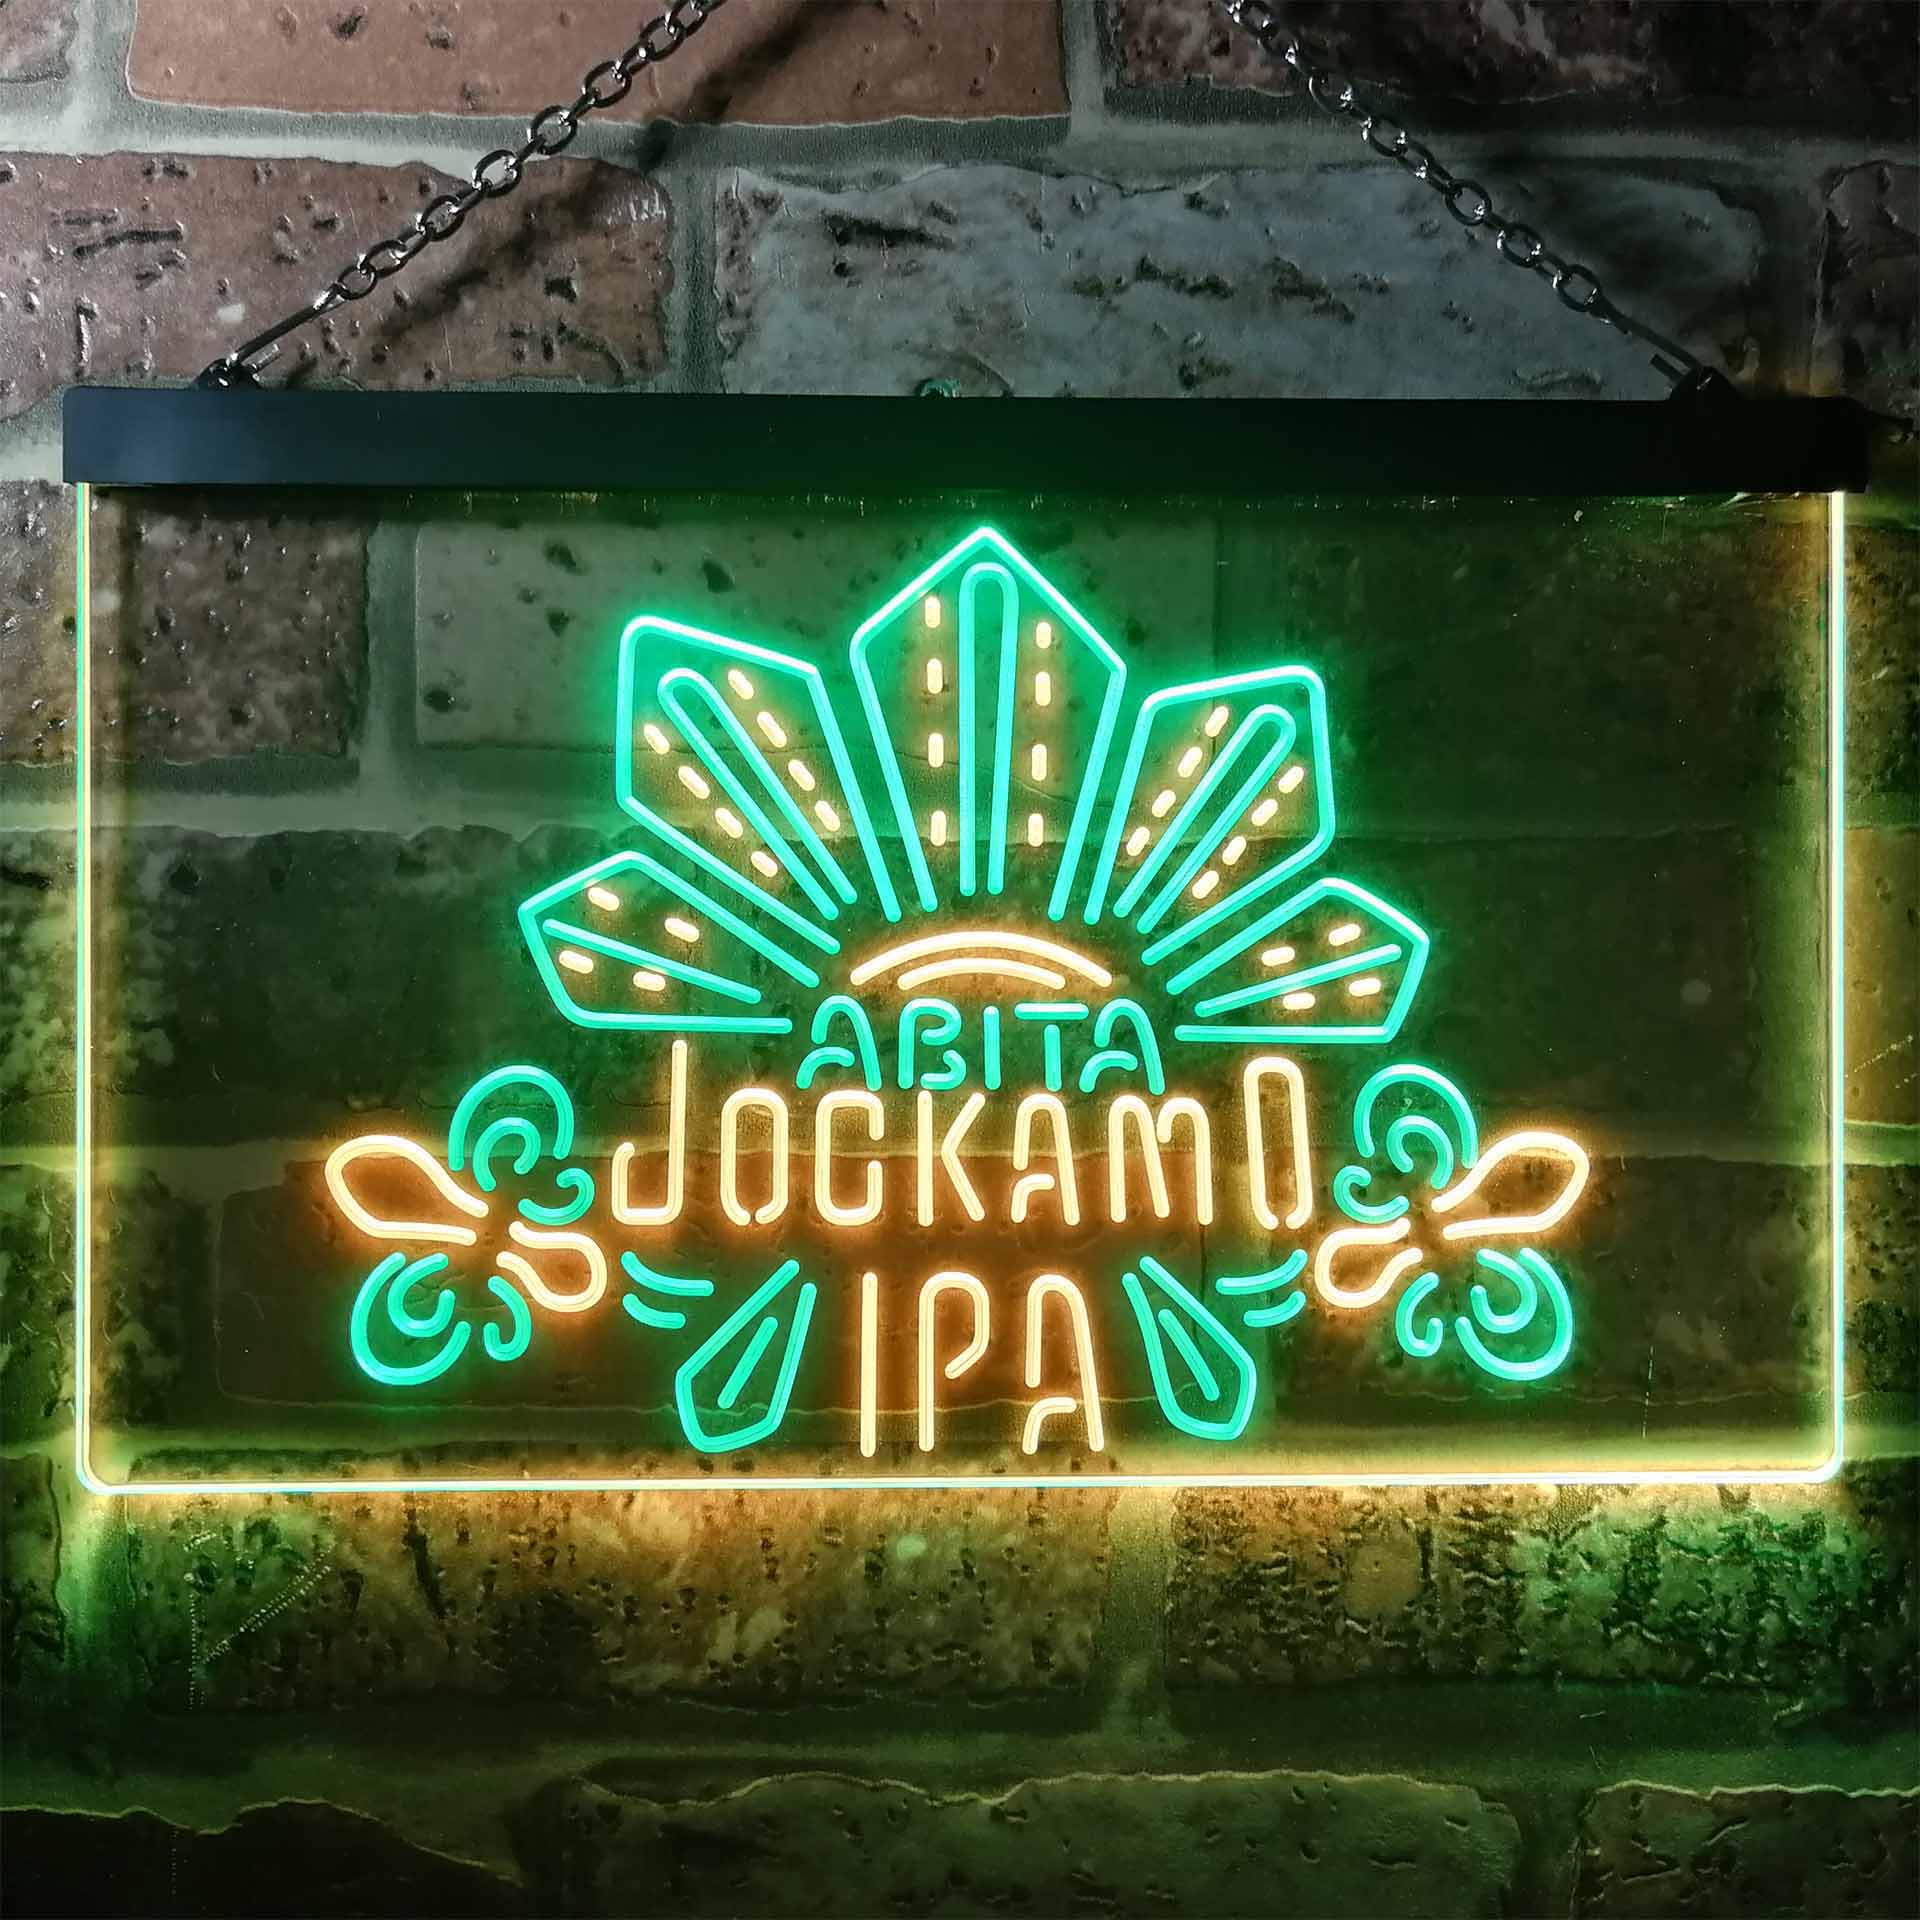 Abita Jockamo IPA Neon LED Sign